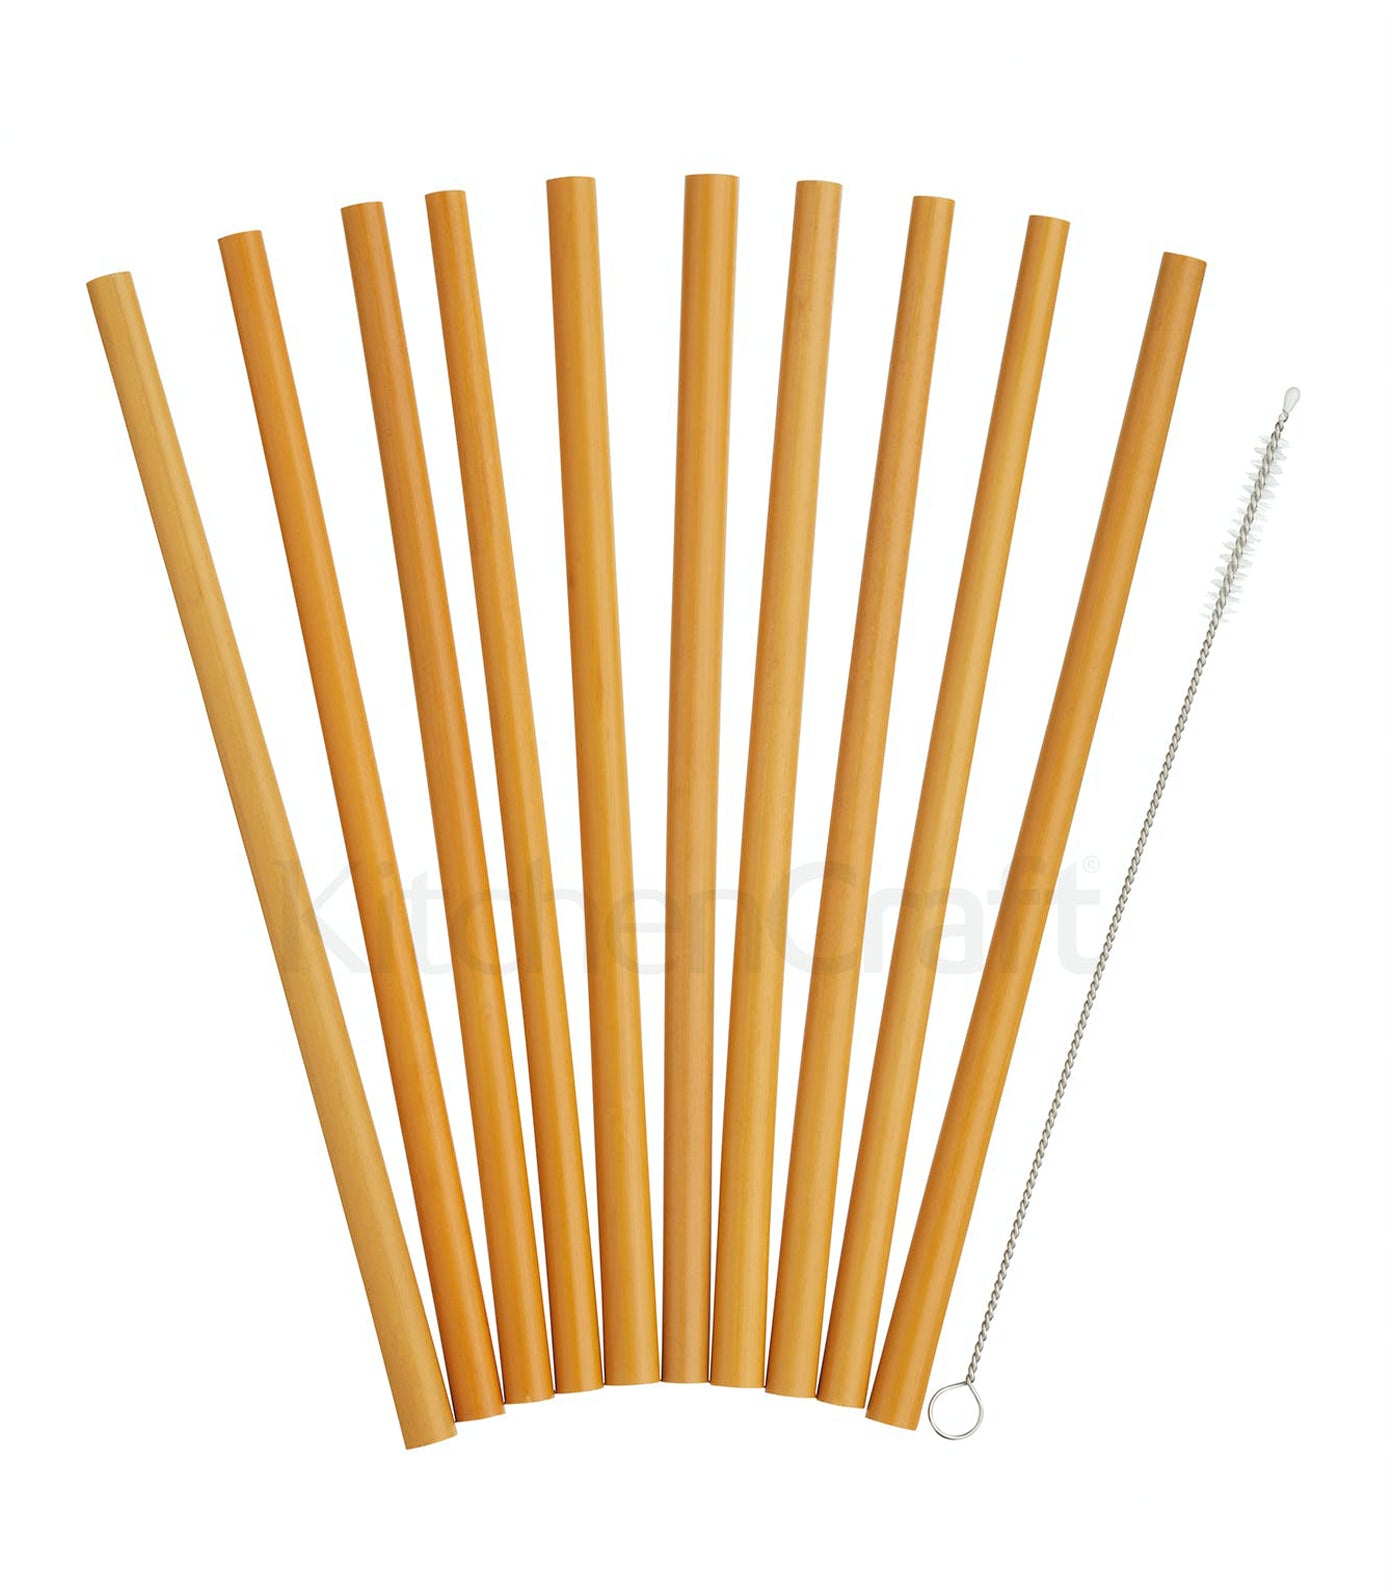 kitchencraft natural elements reusable straws, 10 piece bamboo straw set, 19cm